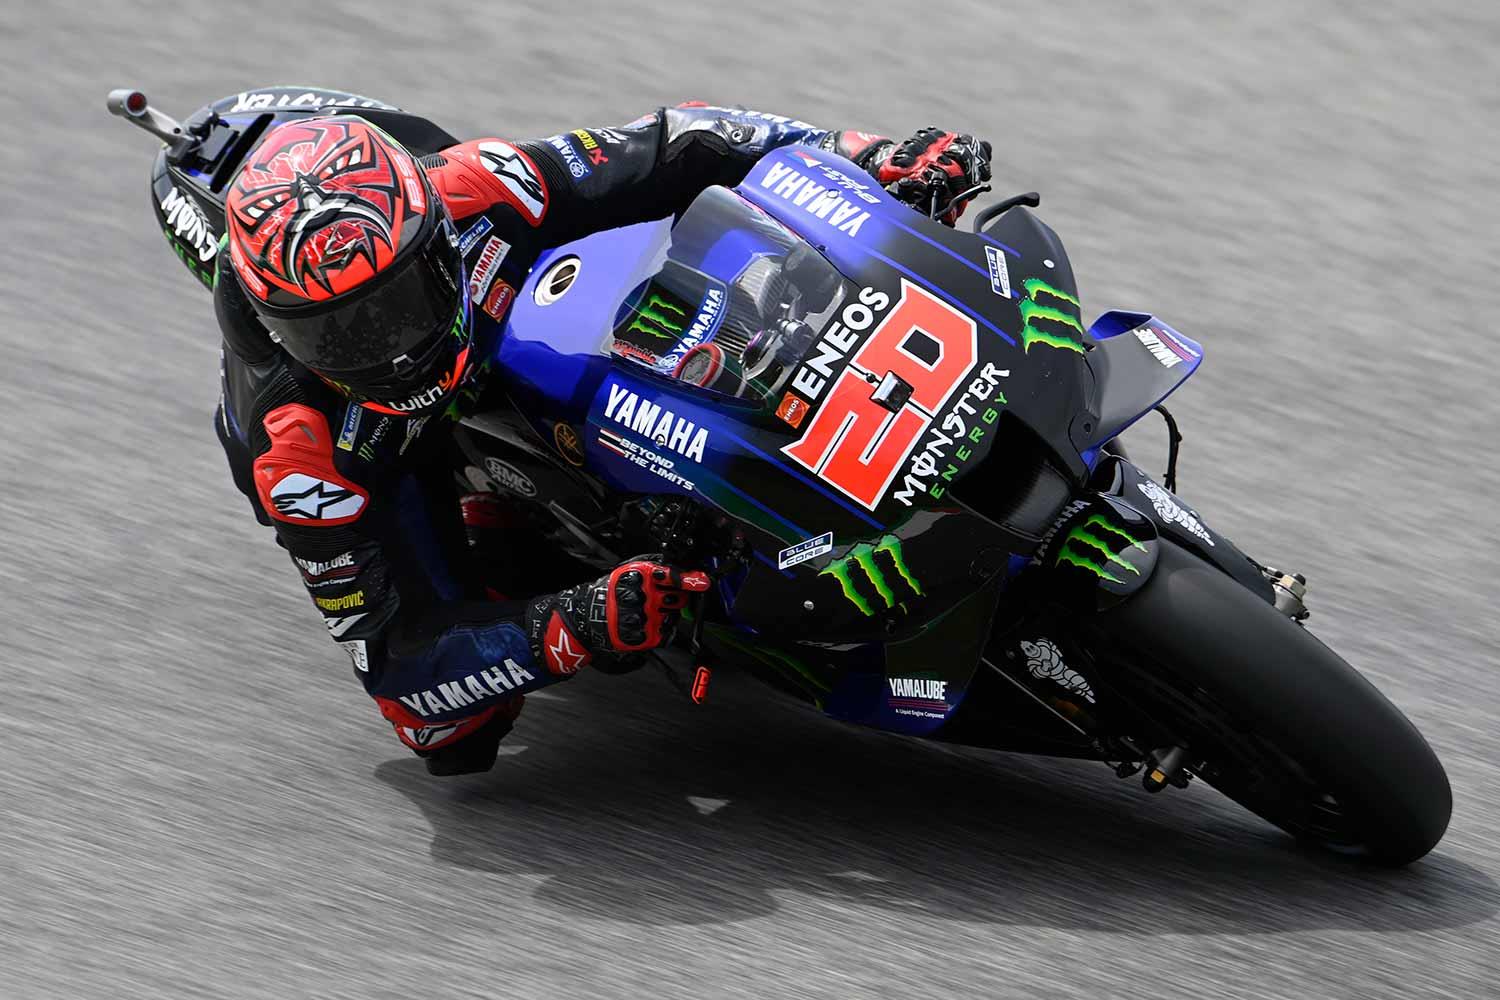 MotoGP Mugello: Fabio Quartararo takes a comfortable victory in Italy